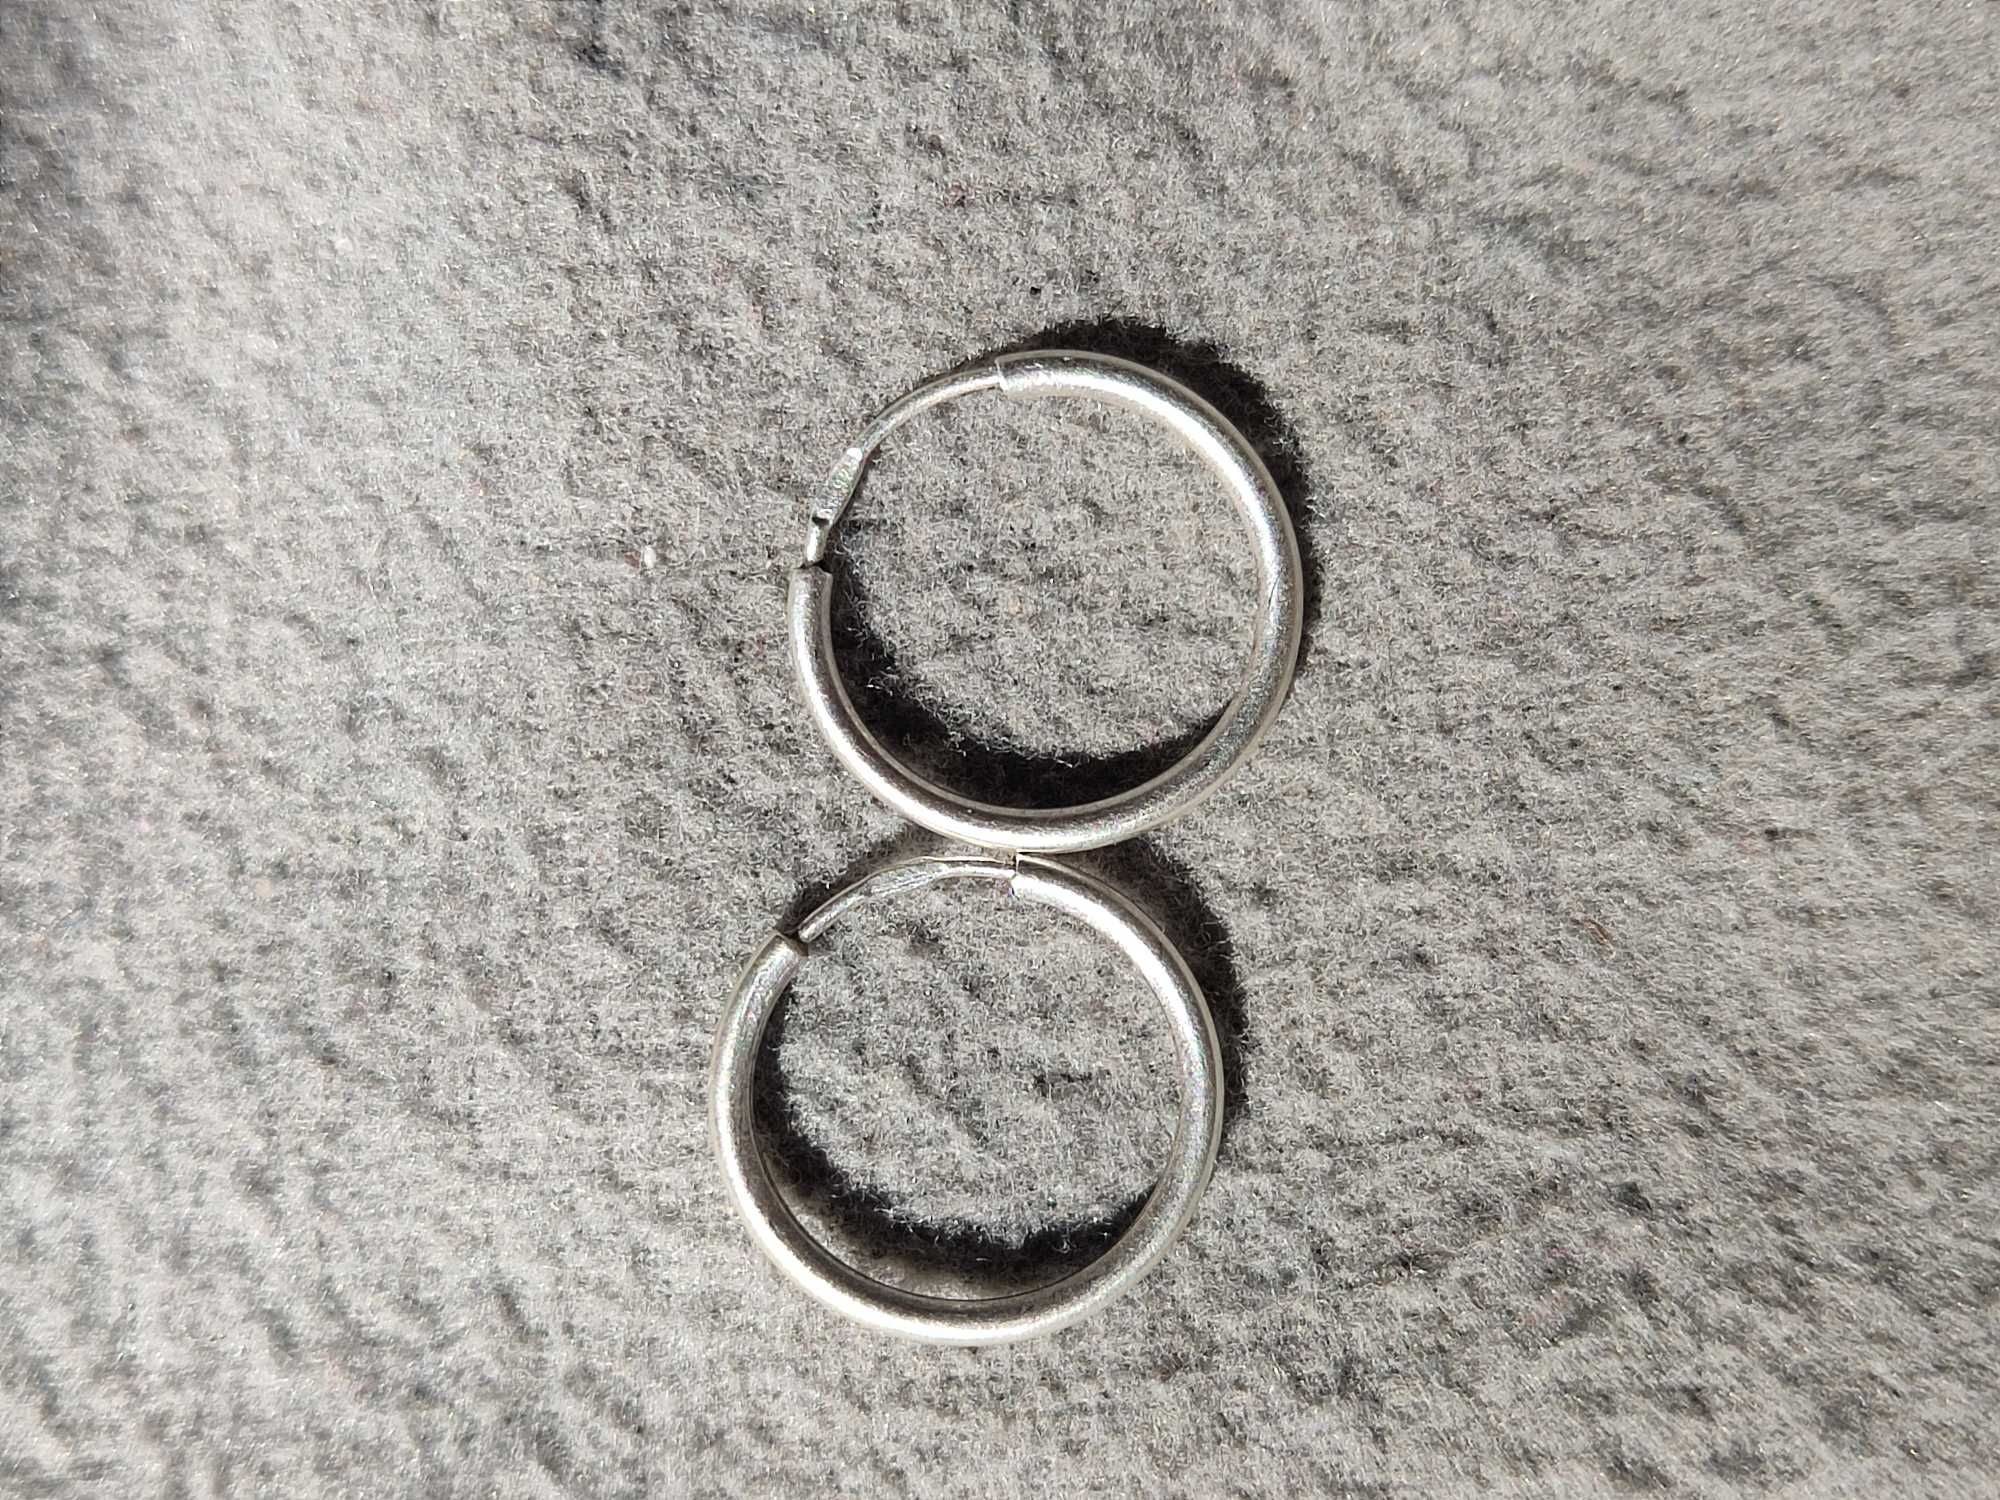 Серьги кольца серебро 925